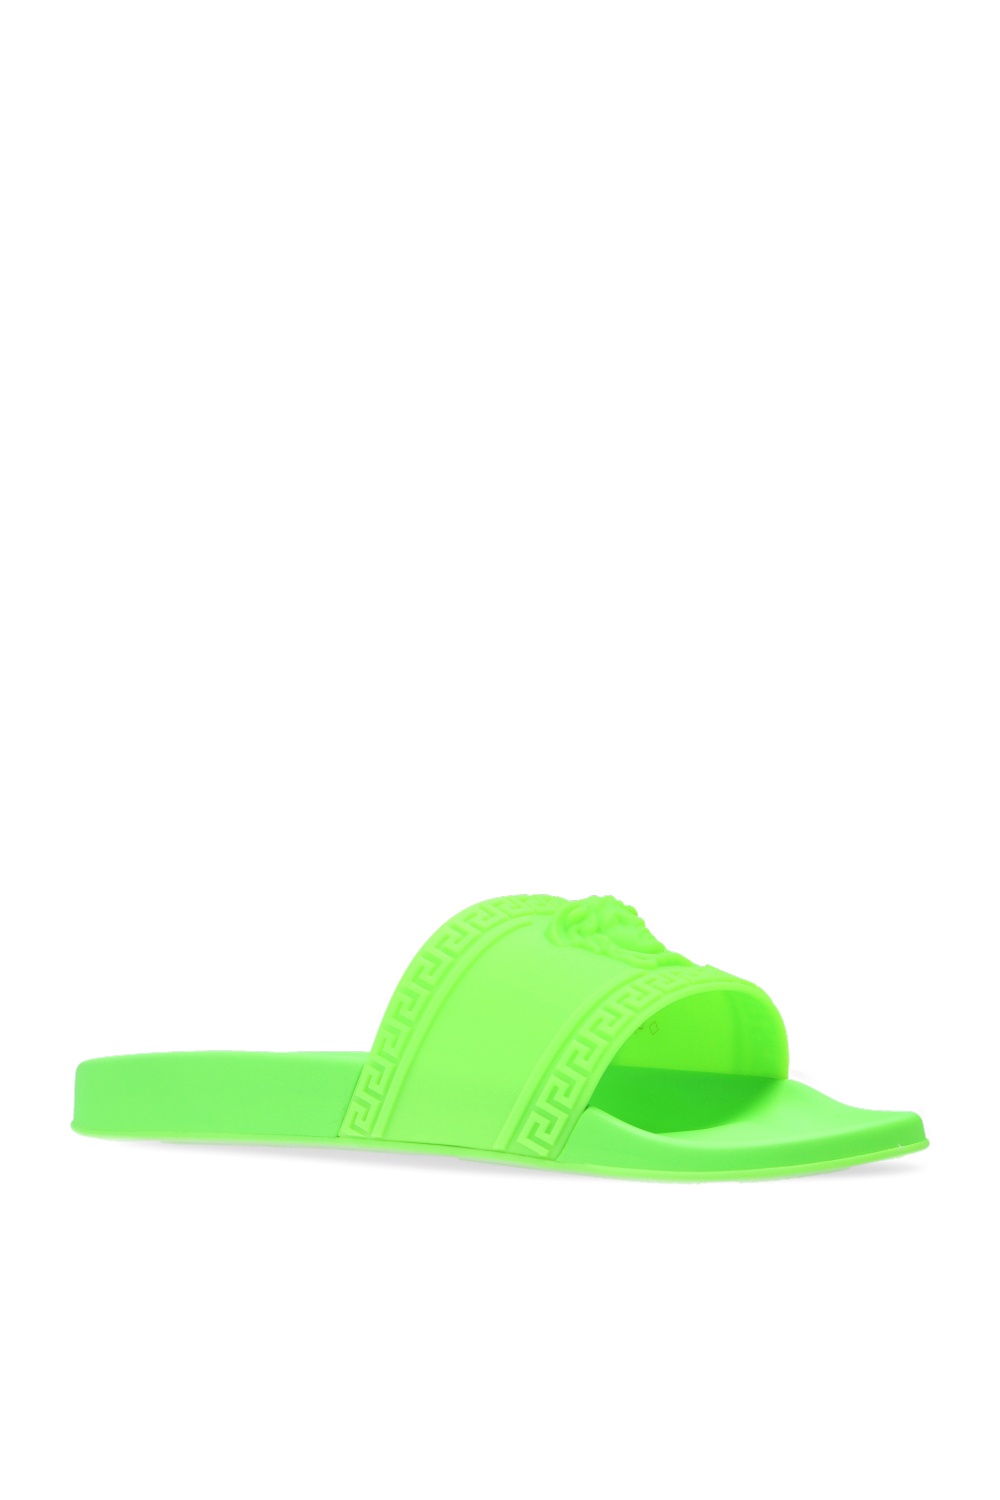 neon green versace slides